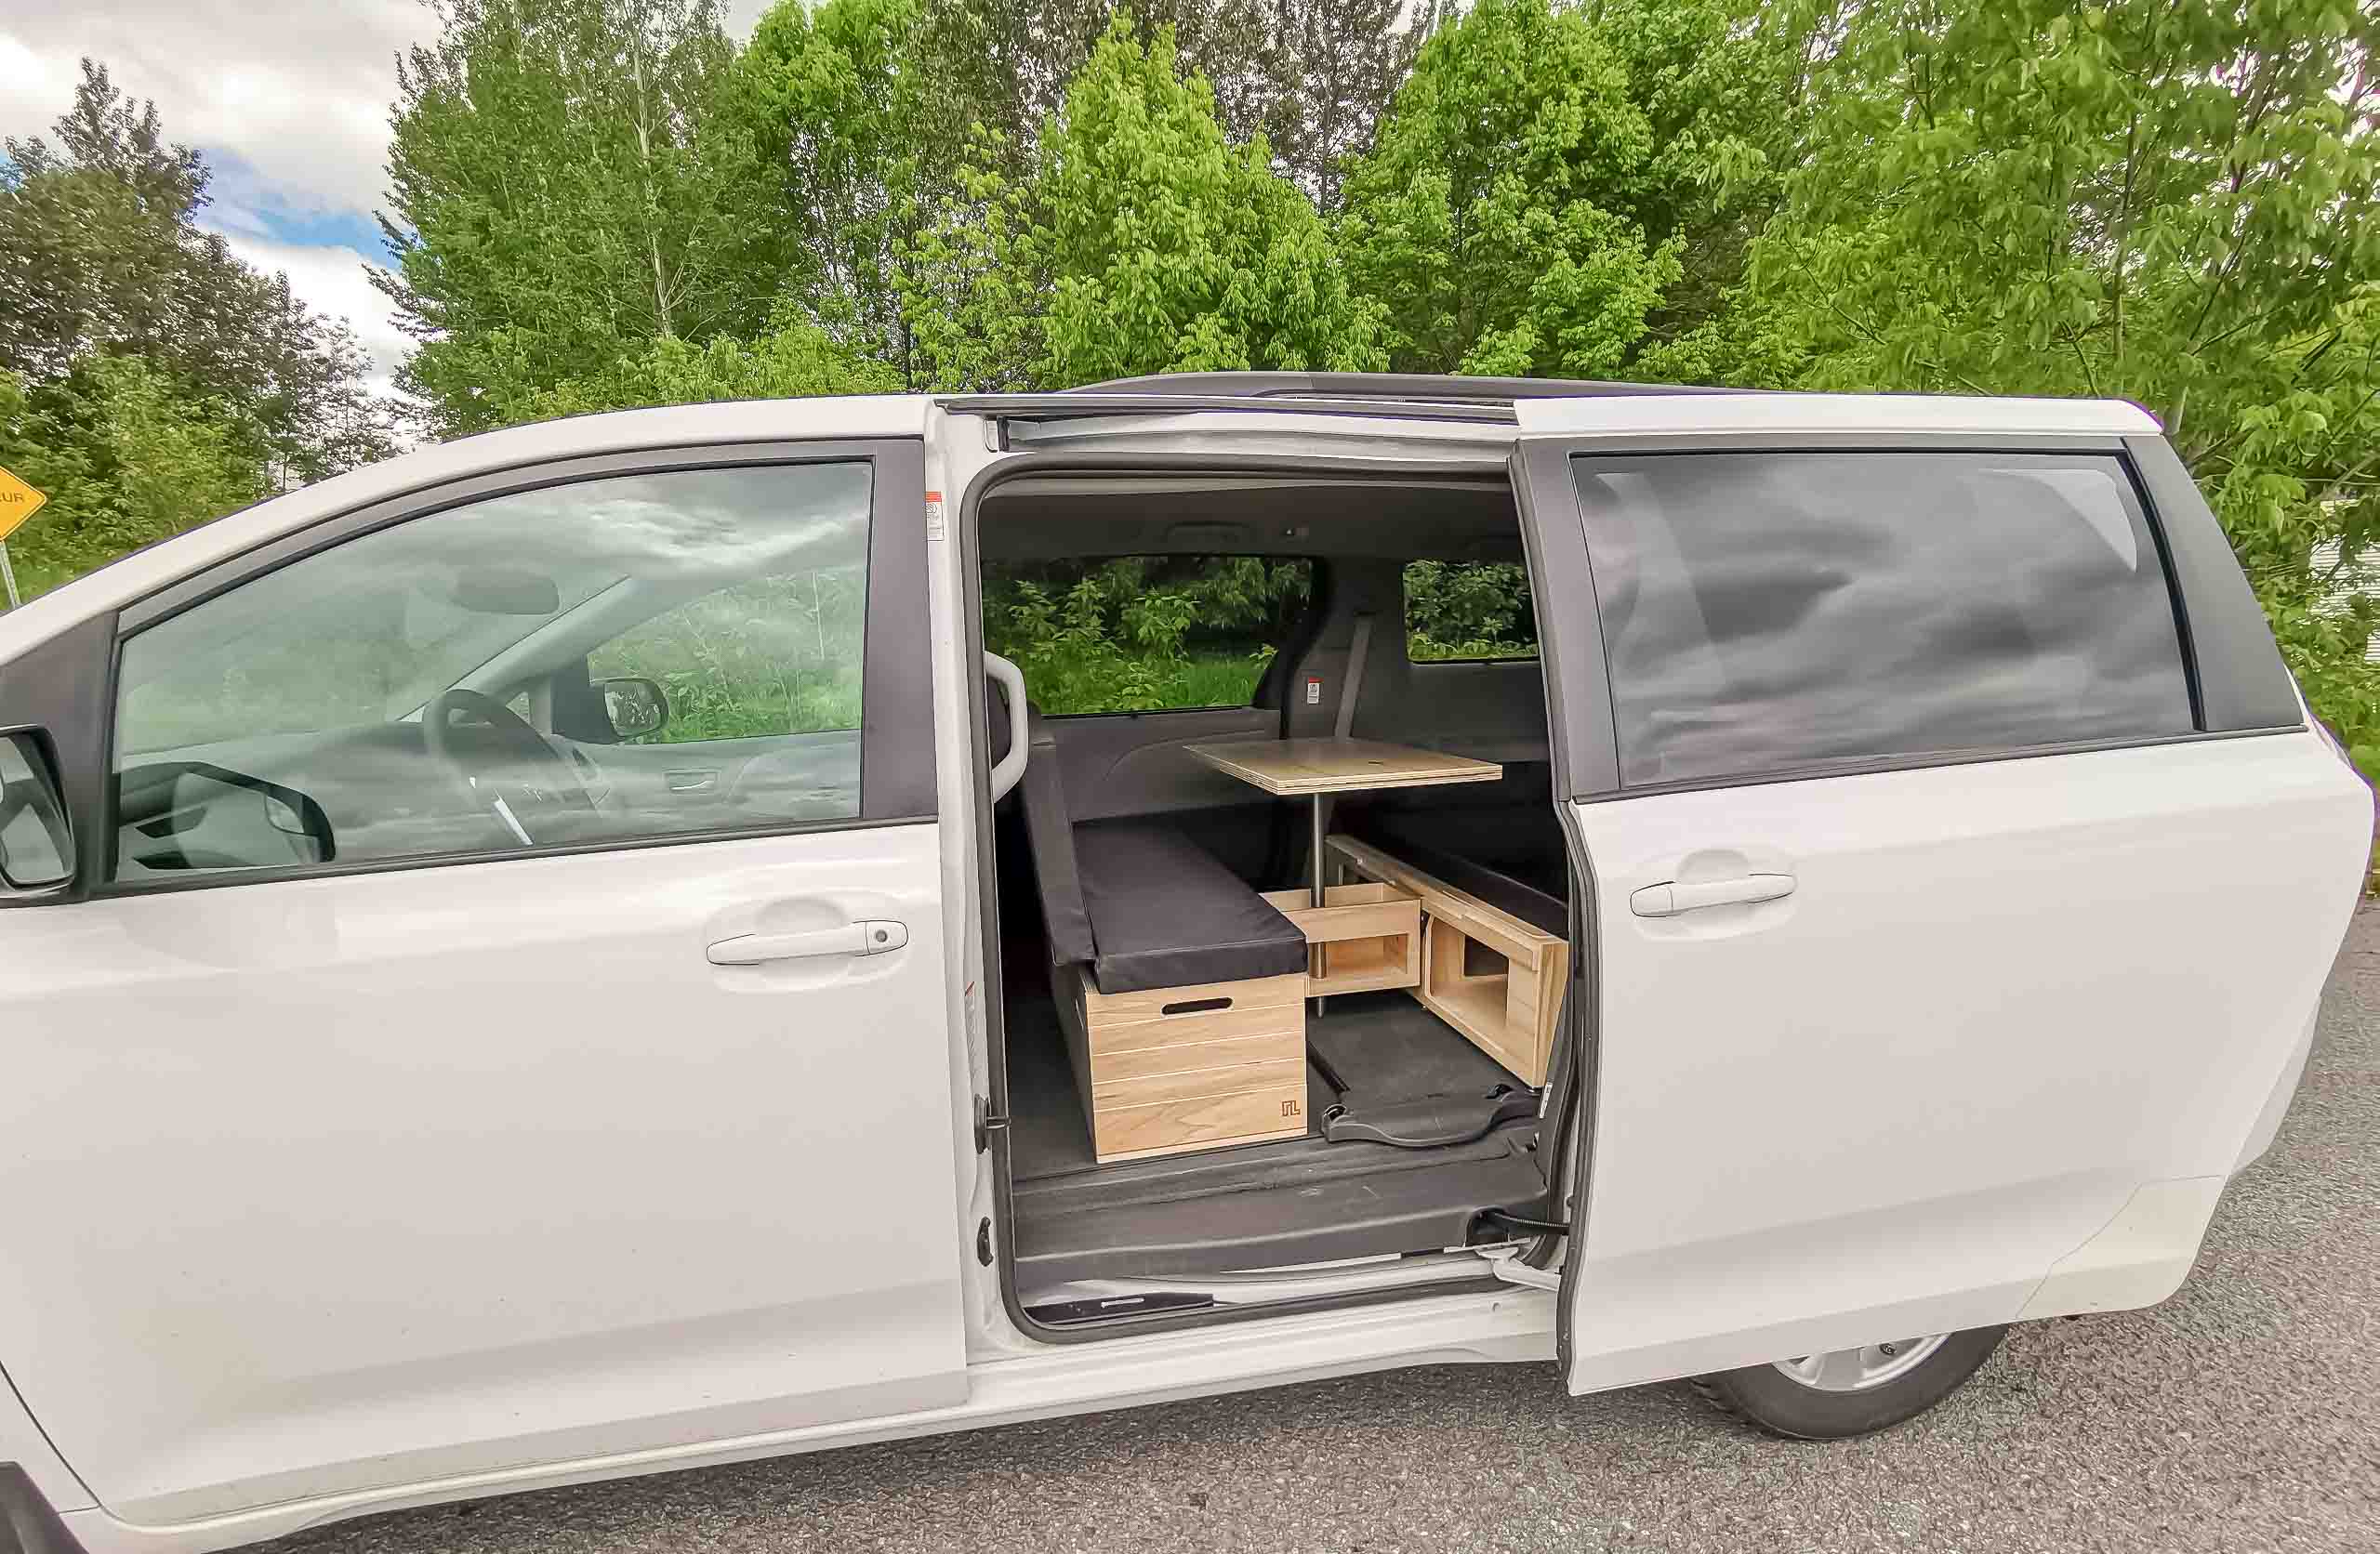 Order your Minivan camper conversion 